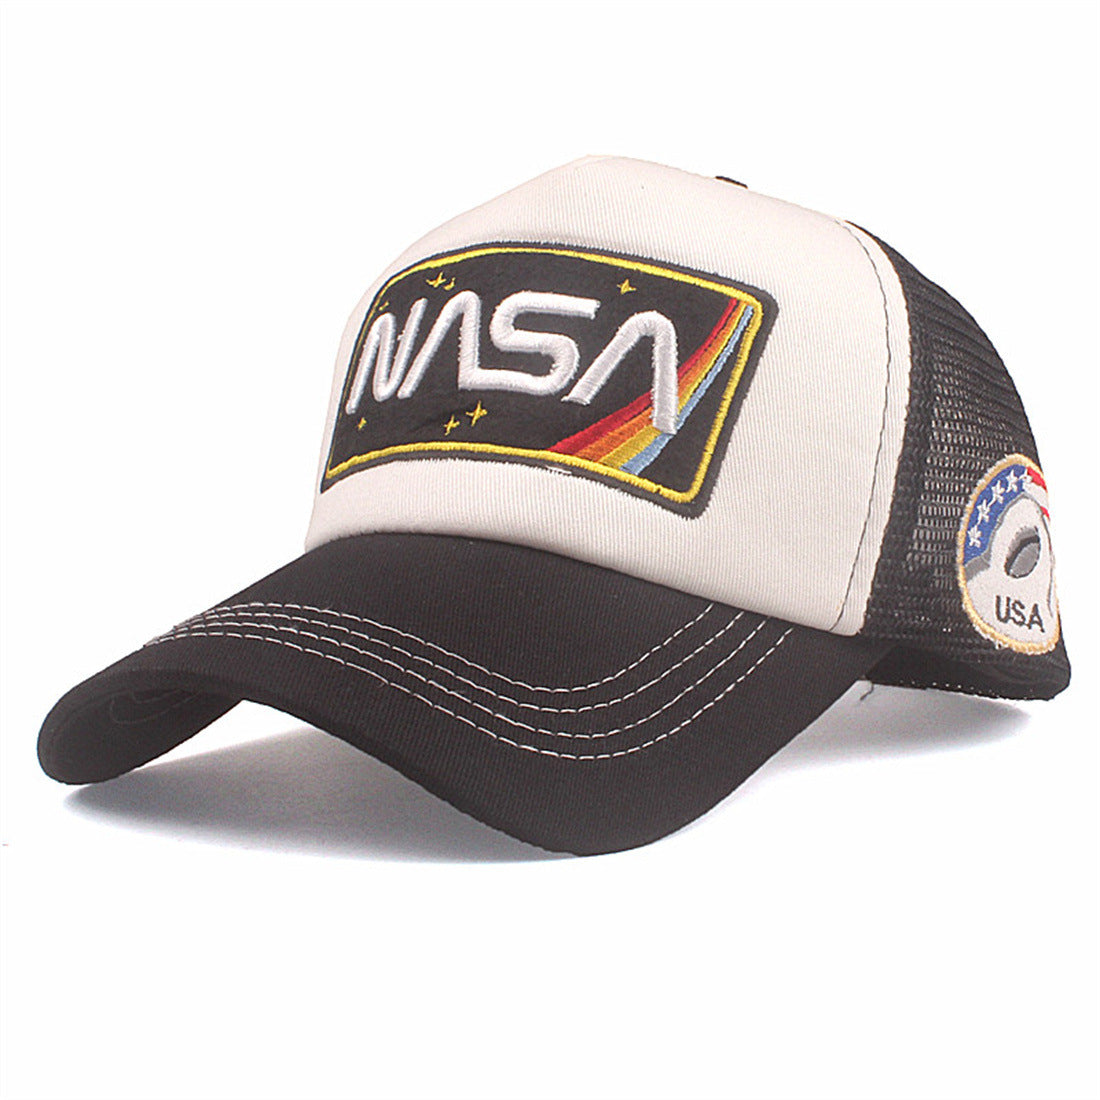 NEW NASA EMBROIDERED BASEBALL CAP - versaley